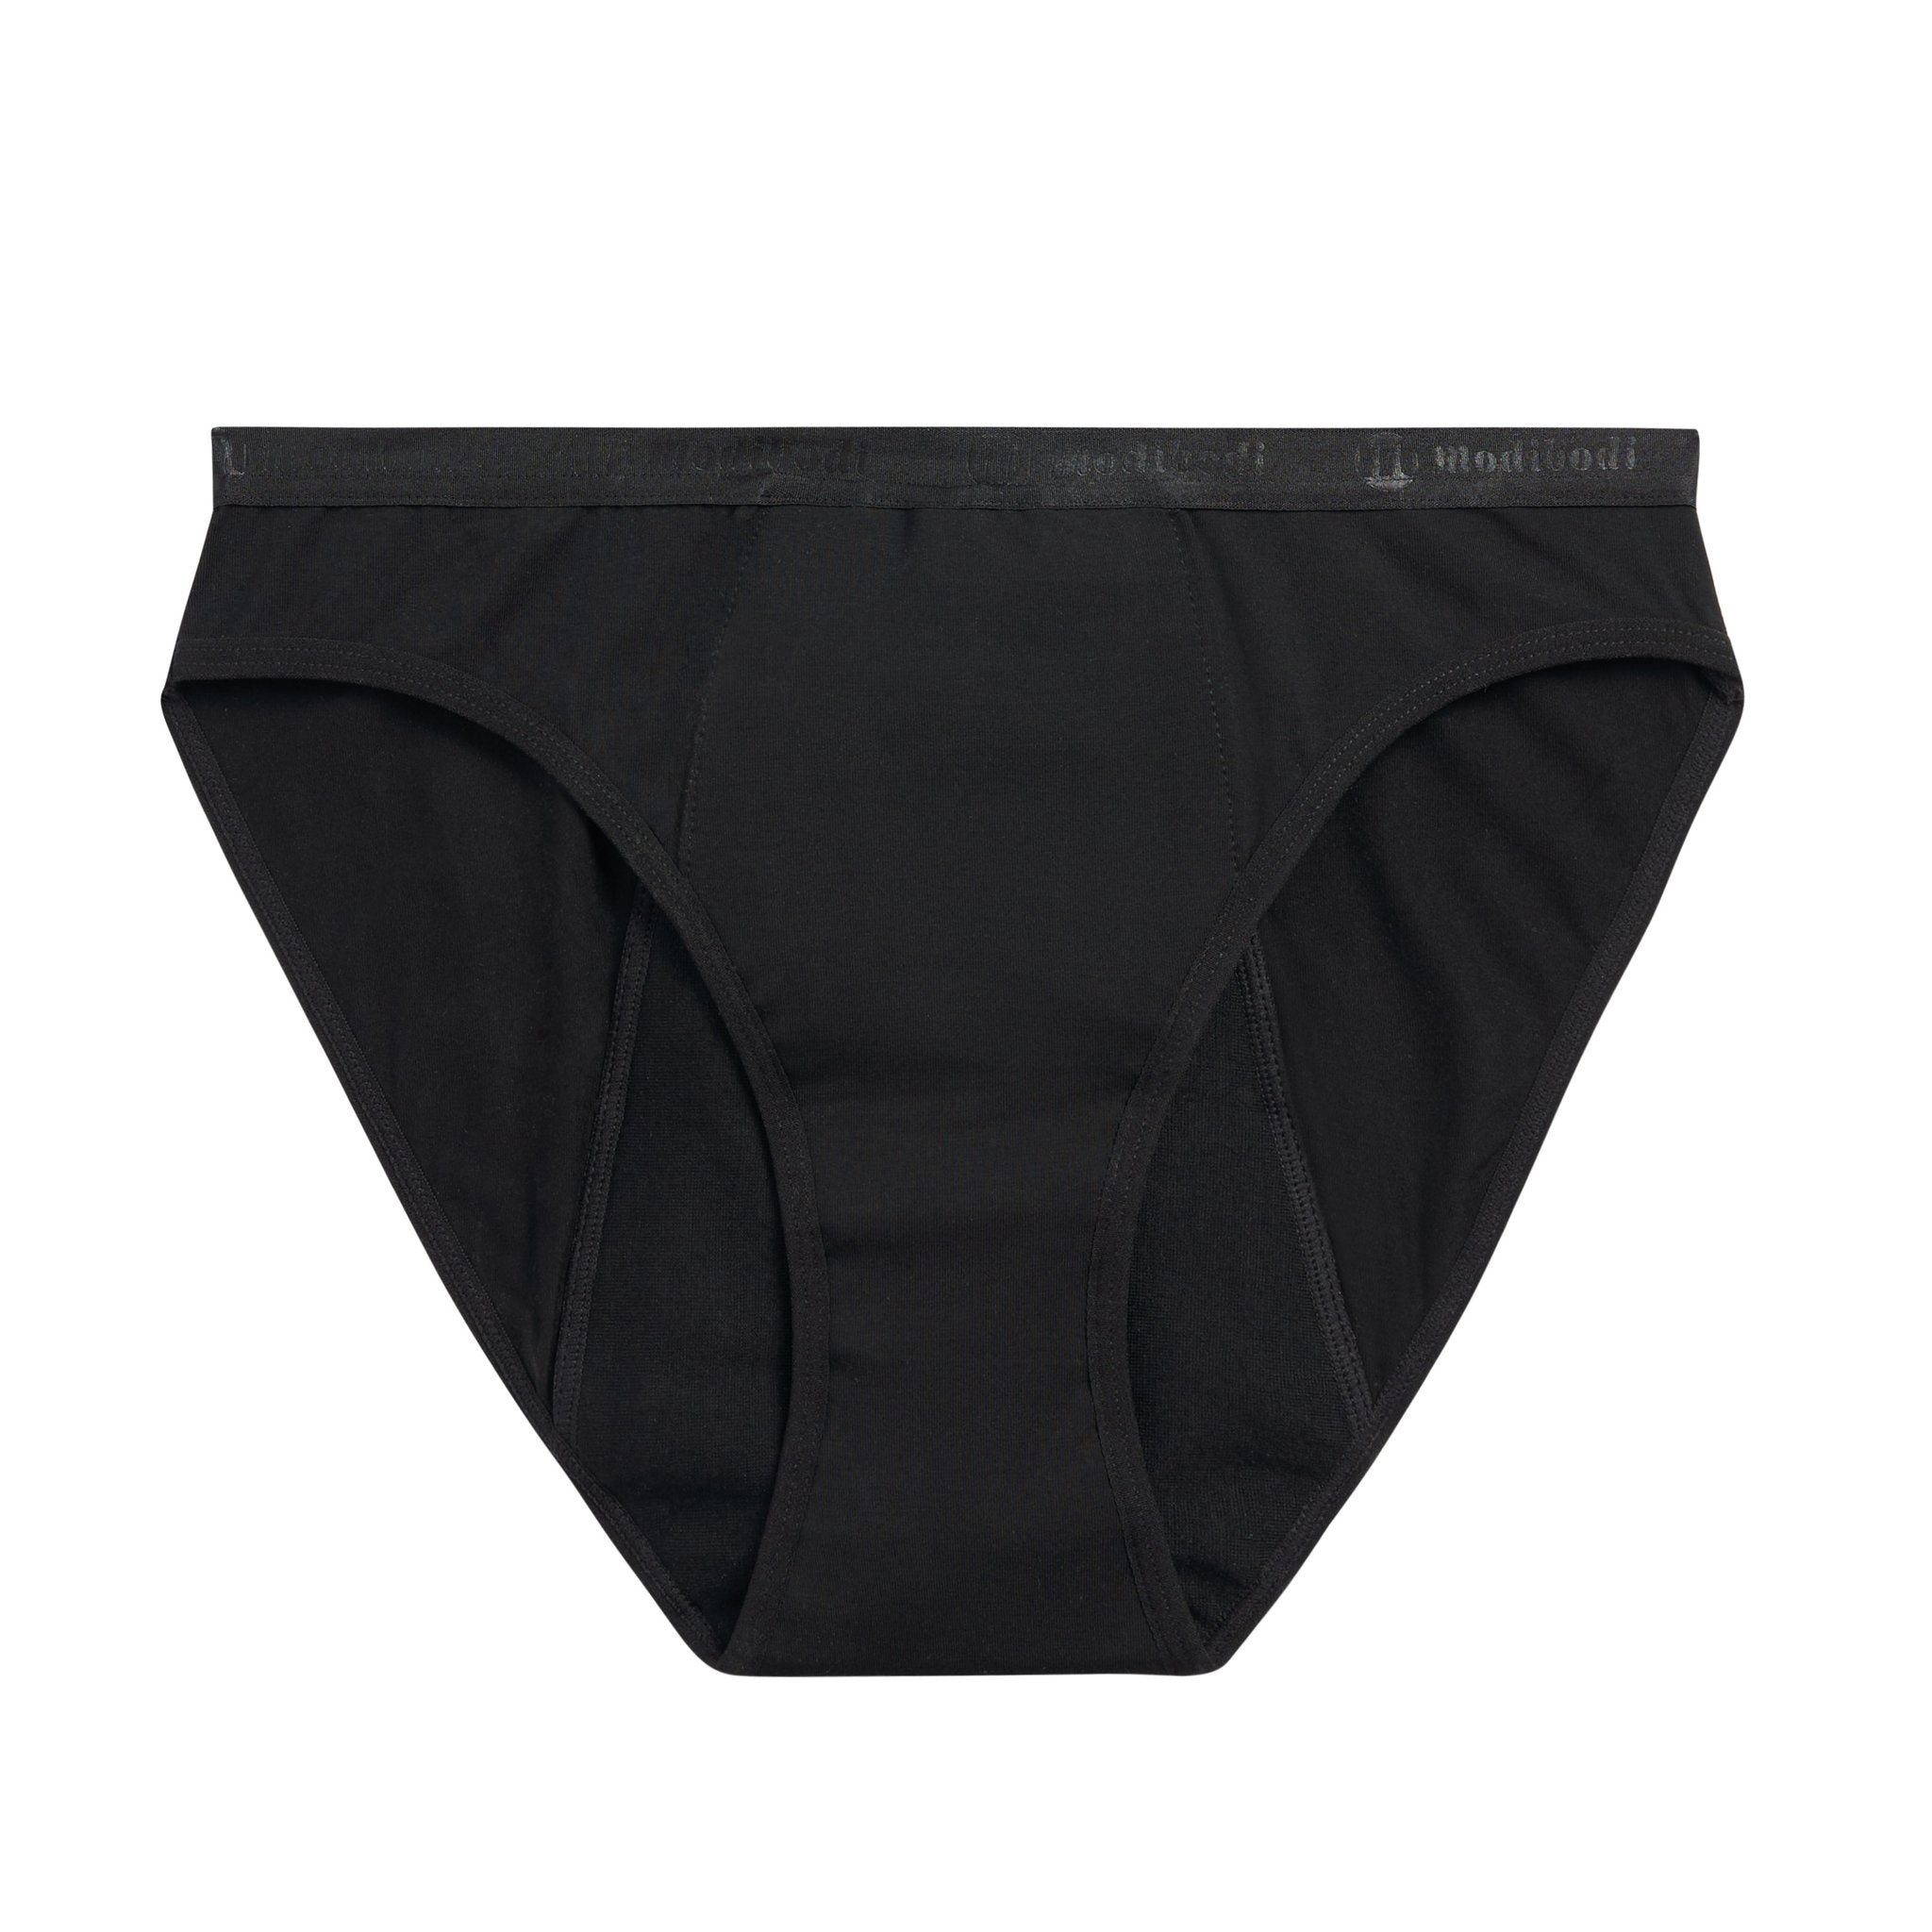 AllMatters Period Underwear Bikini (Heavy)